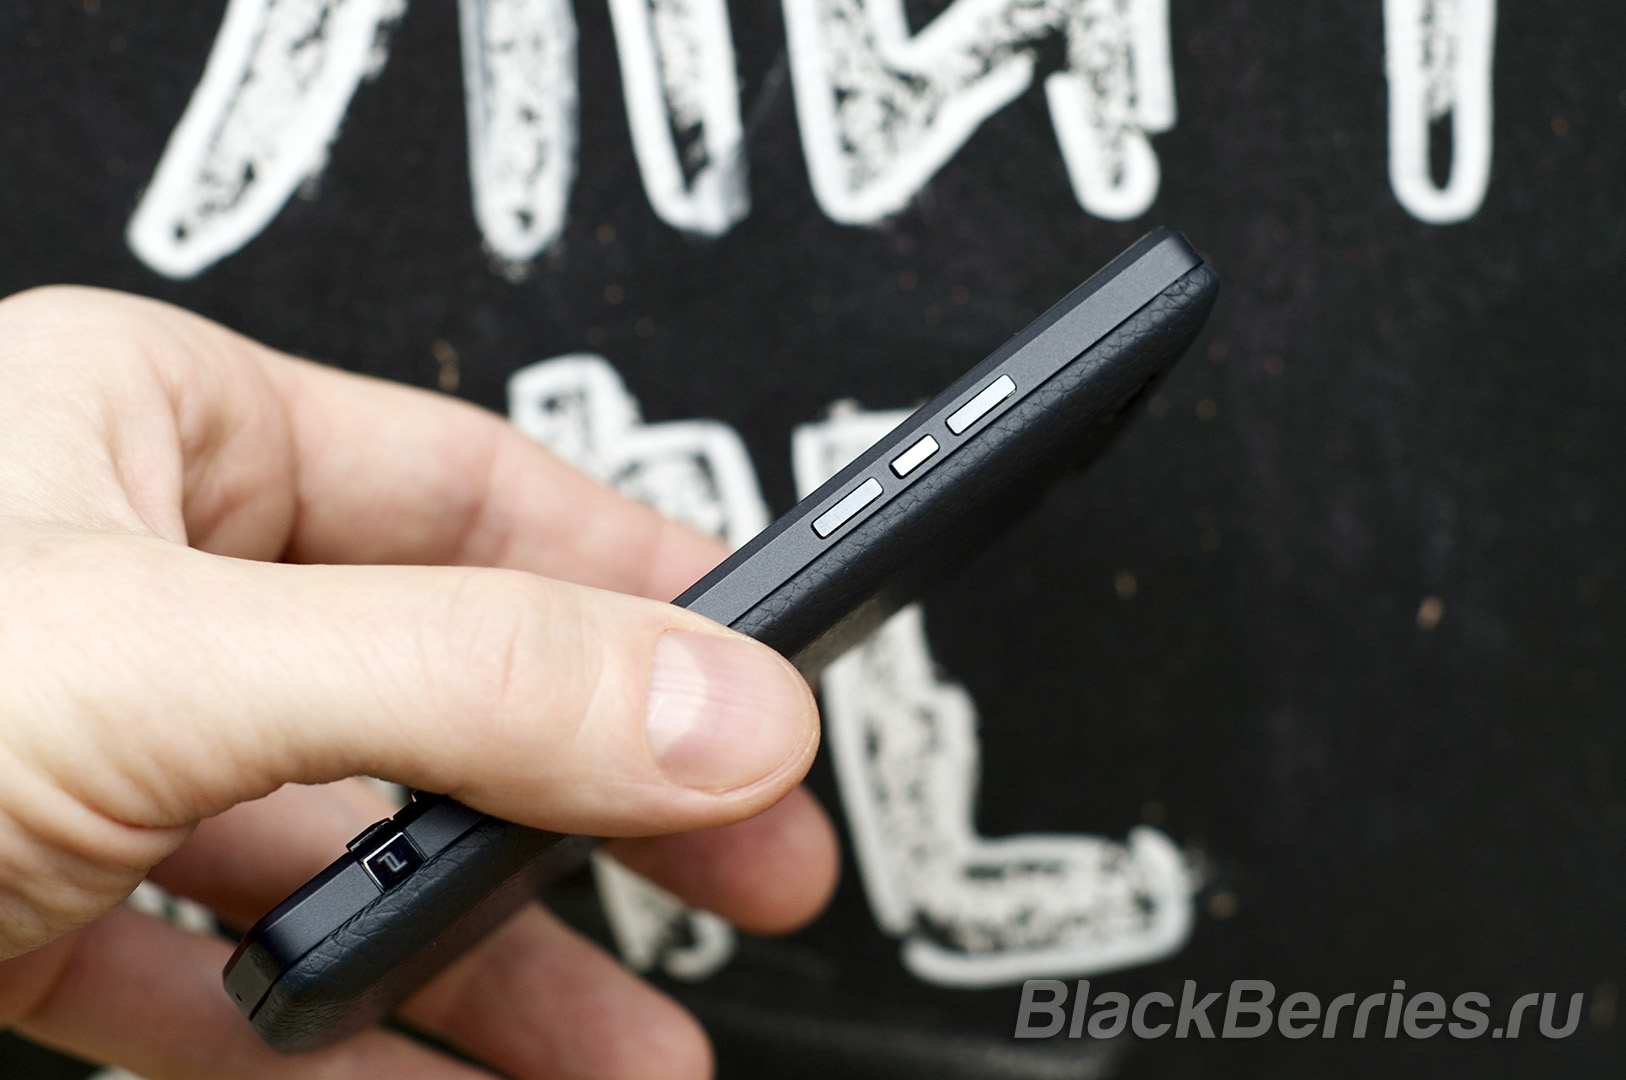 BlackBerry-P9983-Graphite-RUS-8